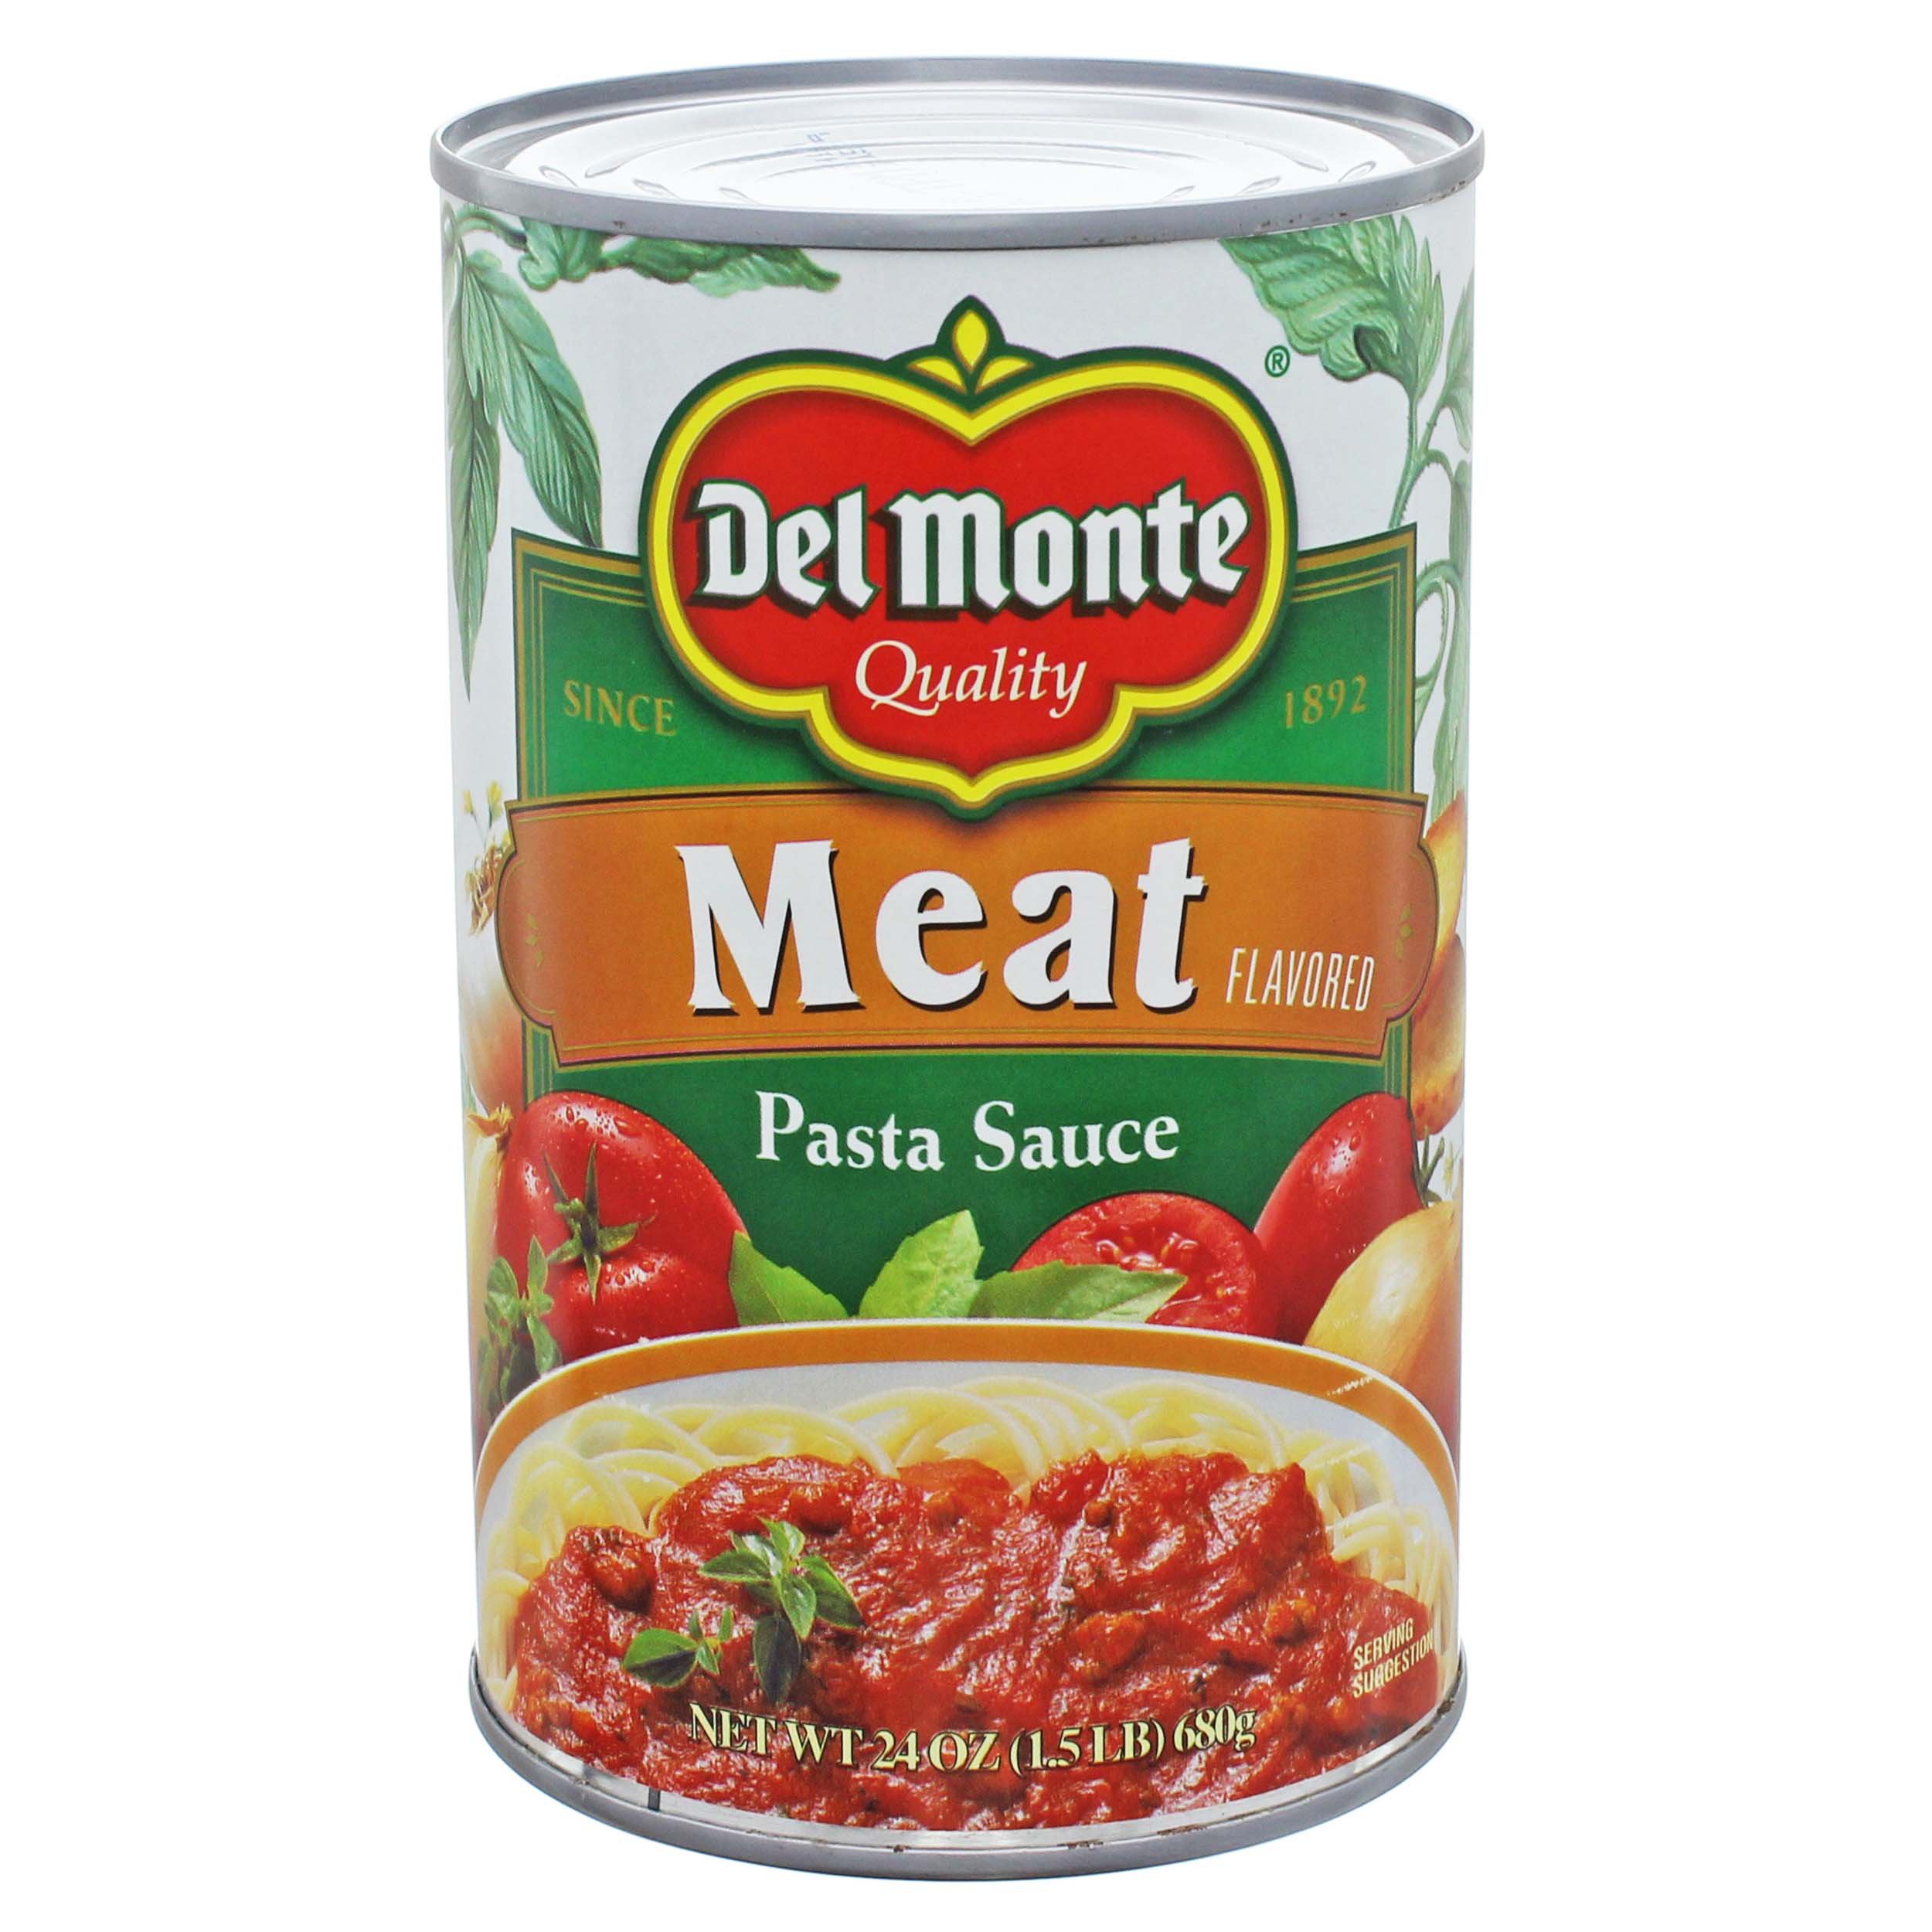 Del Monte Meat Flavored Pasta Sauce - Shop Sauces & Marinades at H-E-B